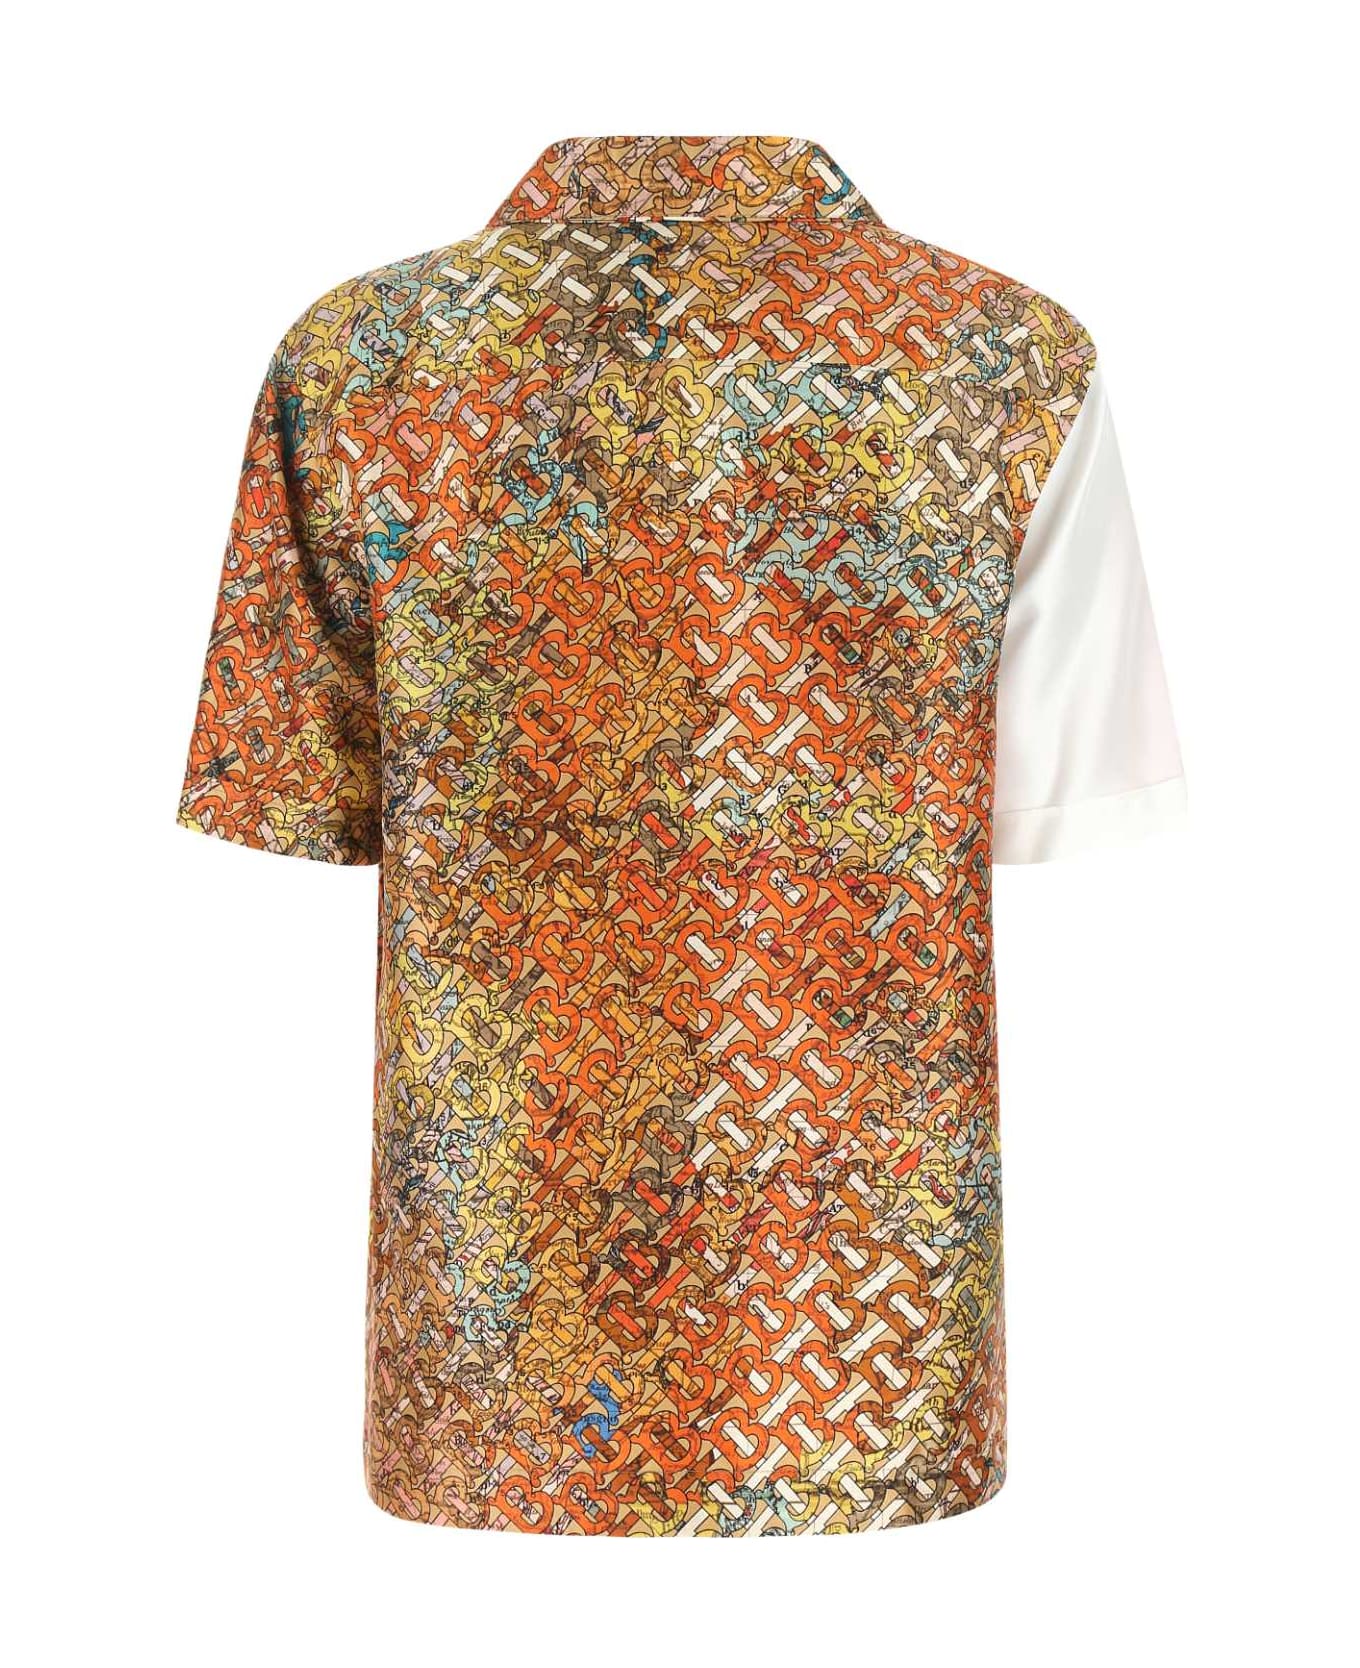 Burberry Printed Silk Shirt - A1953